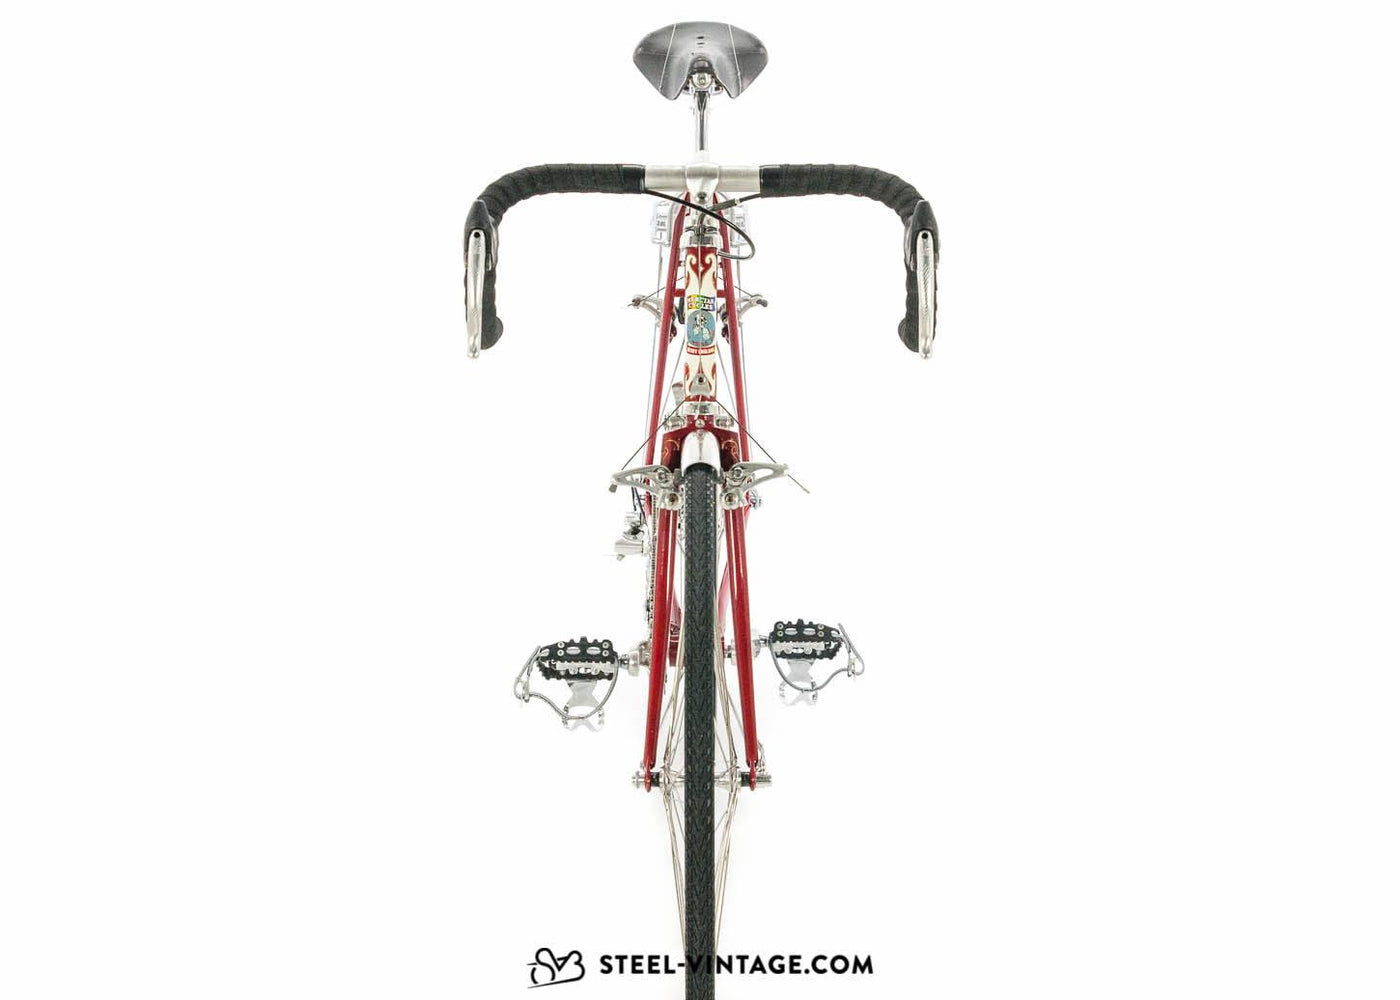 Mercian Vincitore Special Randonneur Early 1990s - Steel Vintage Bikes